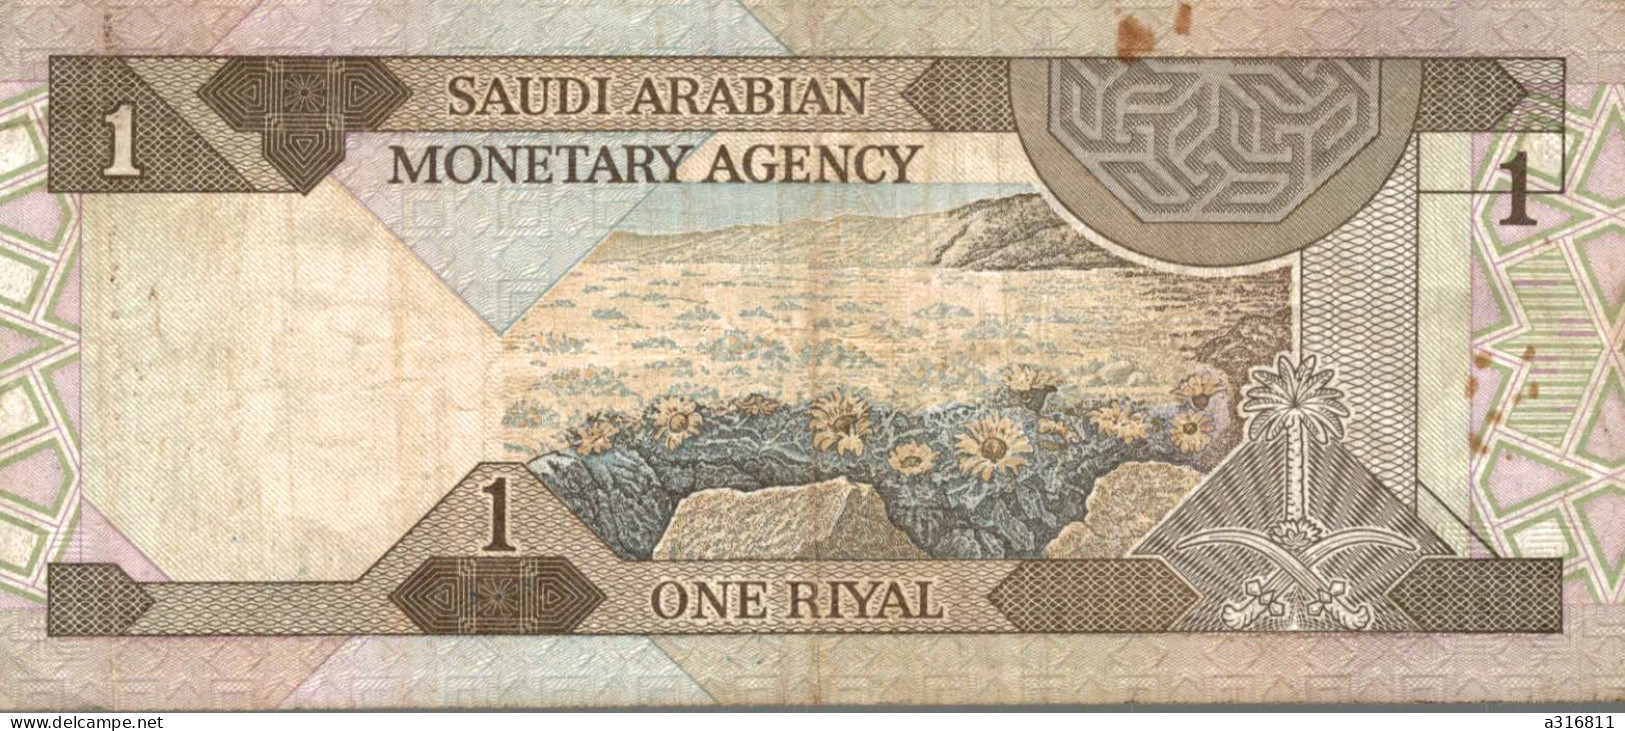 Saudi Arabian 1 One Riyal - Saudi Arabia